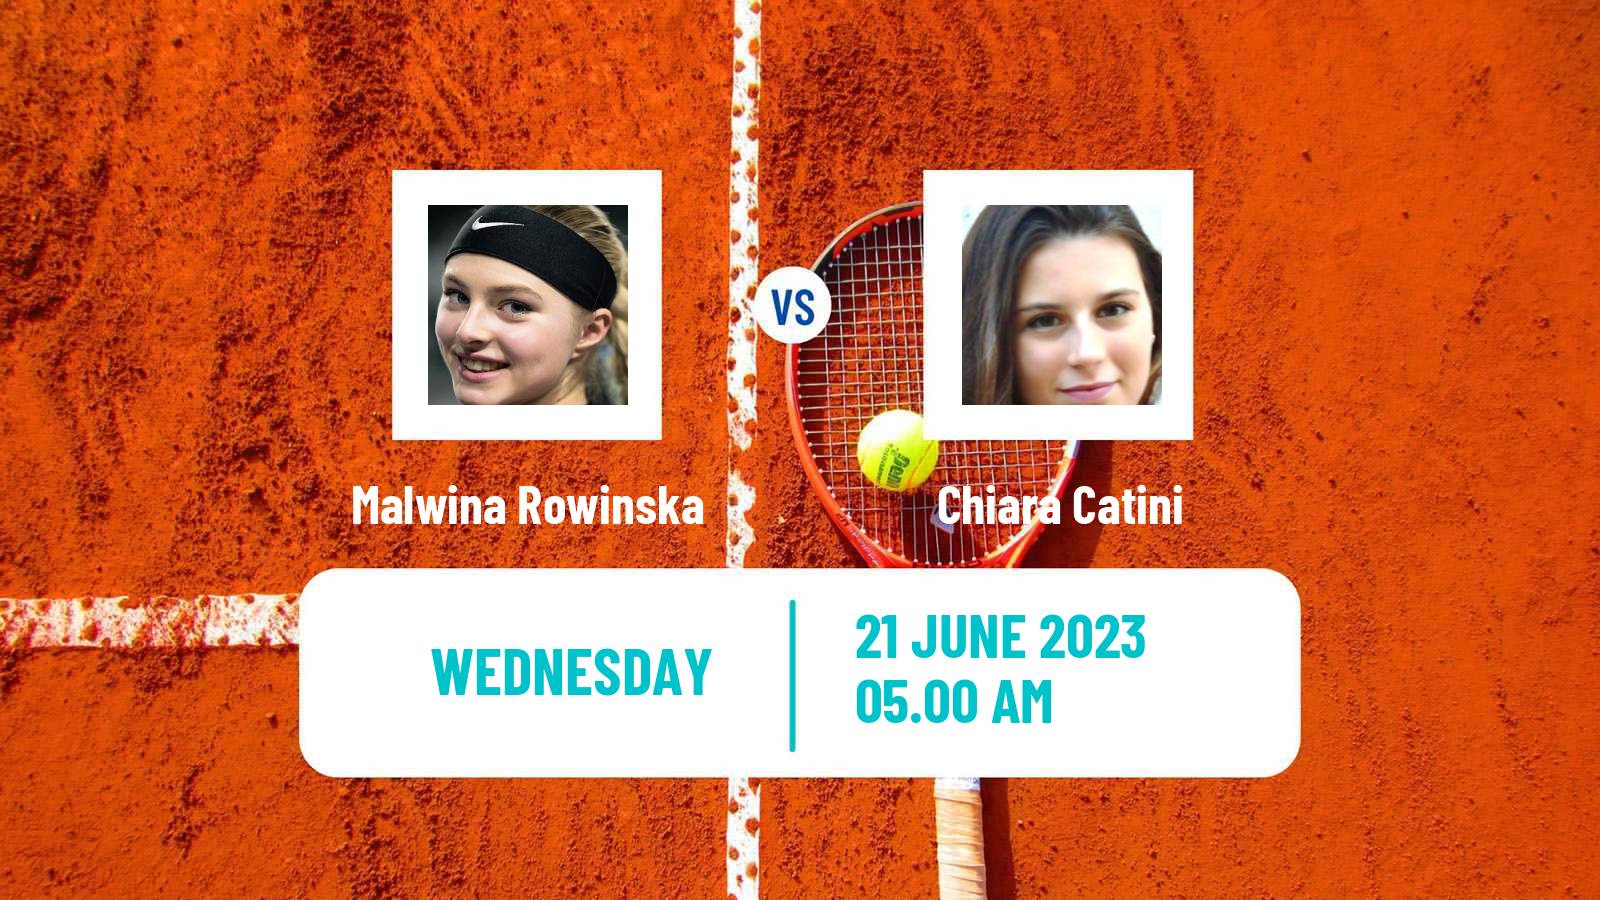 Tennis ITF W15 Gdansk Women Malwina Rowinska - Chiara Catini